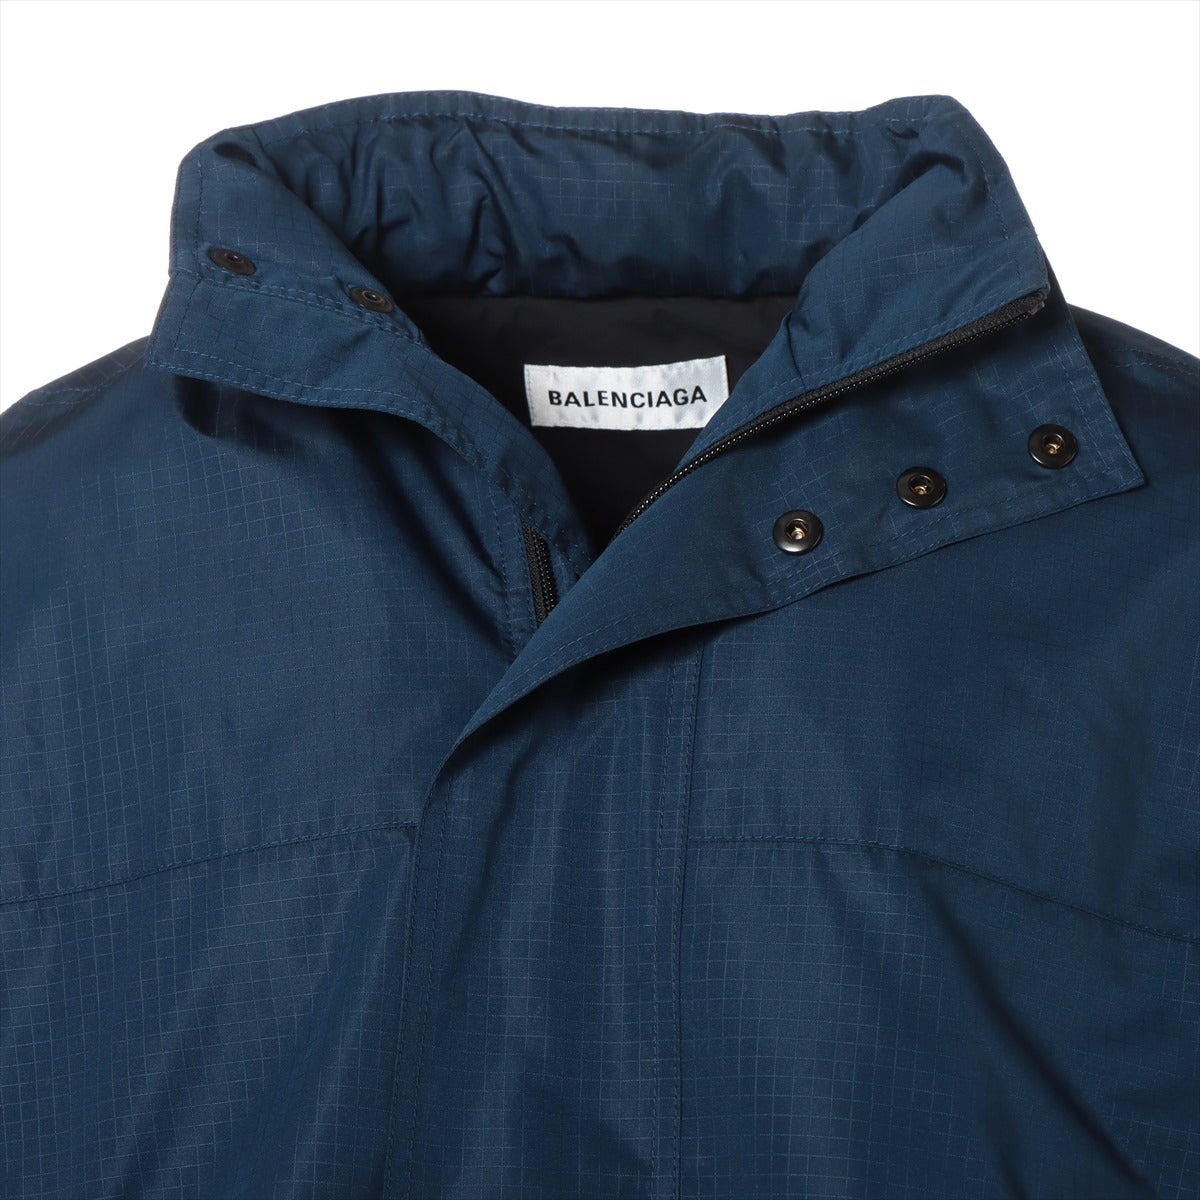 Balenciaga 20 years Polyester & nylon Nylon jacket 36 Men's Navy blue  629009 shape swing jacket